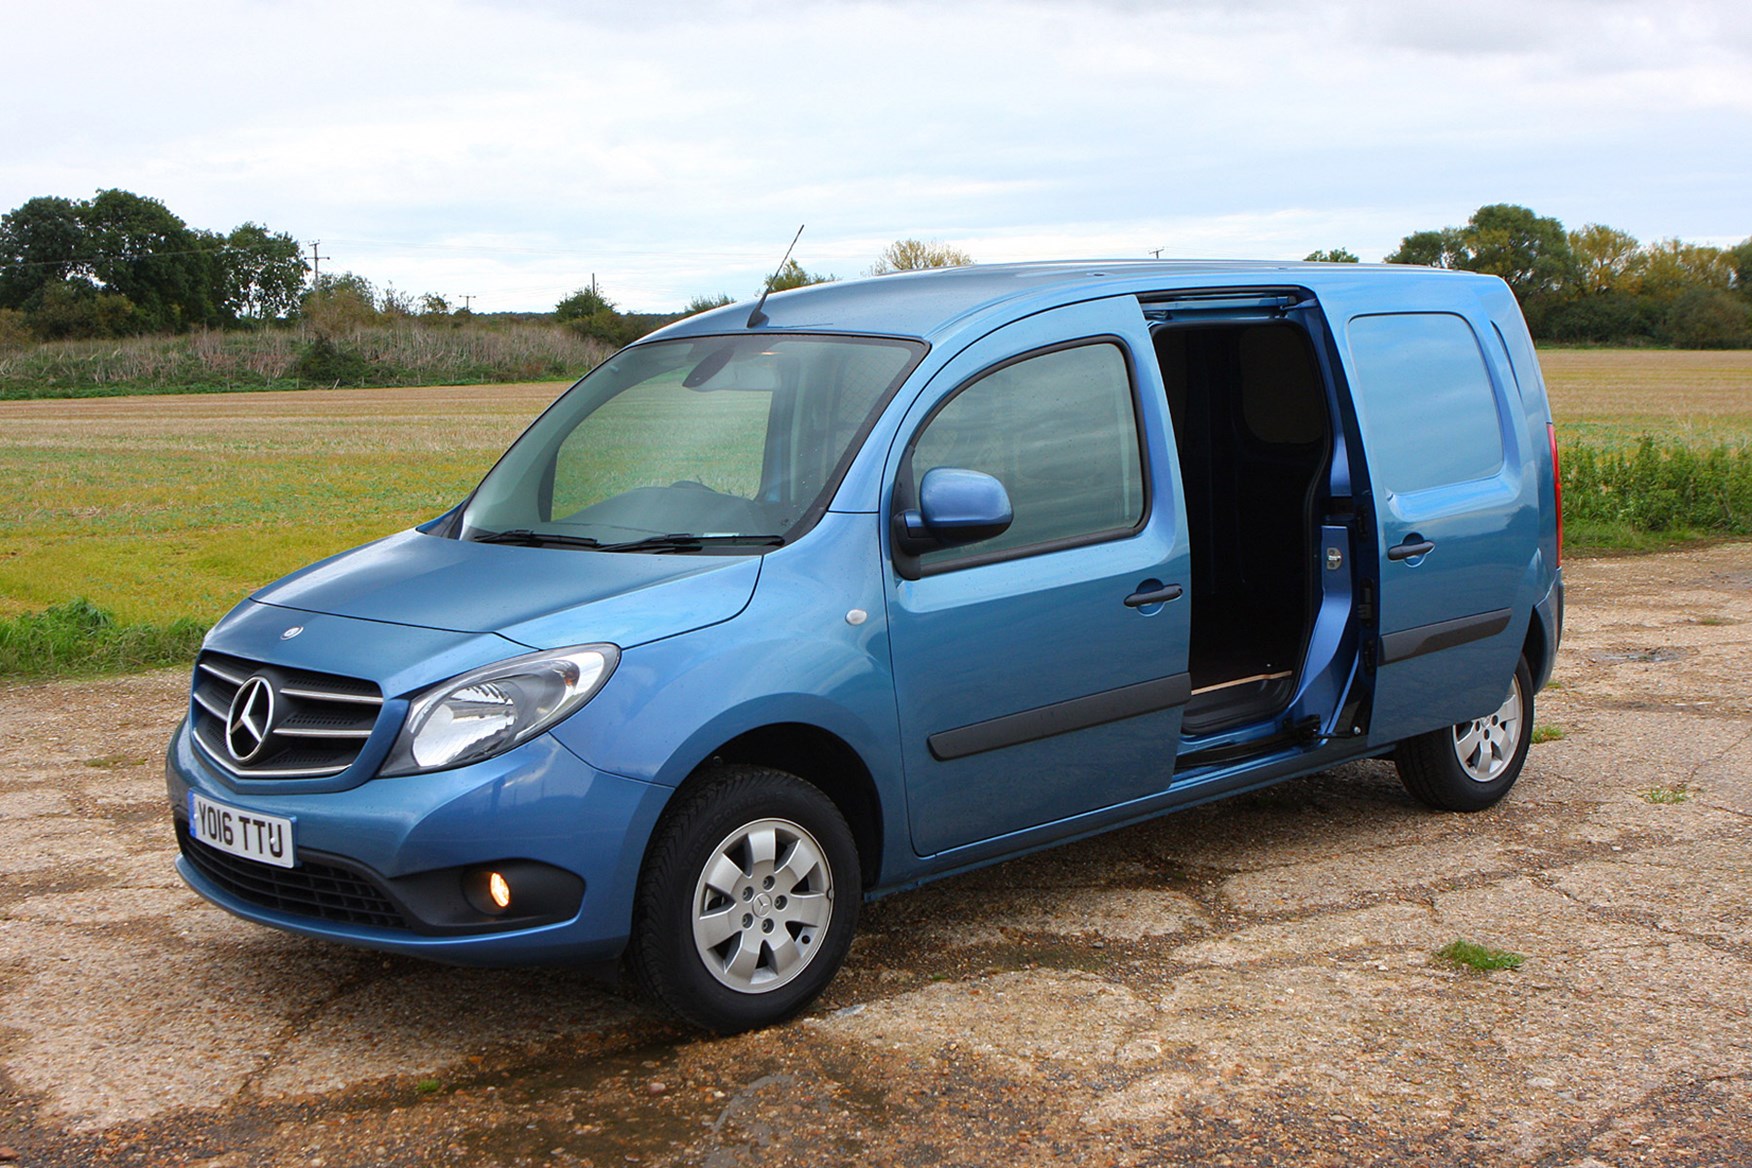 Mercedes-Benz Citan full review on Parkers Vans - load area access